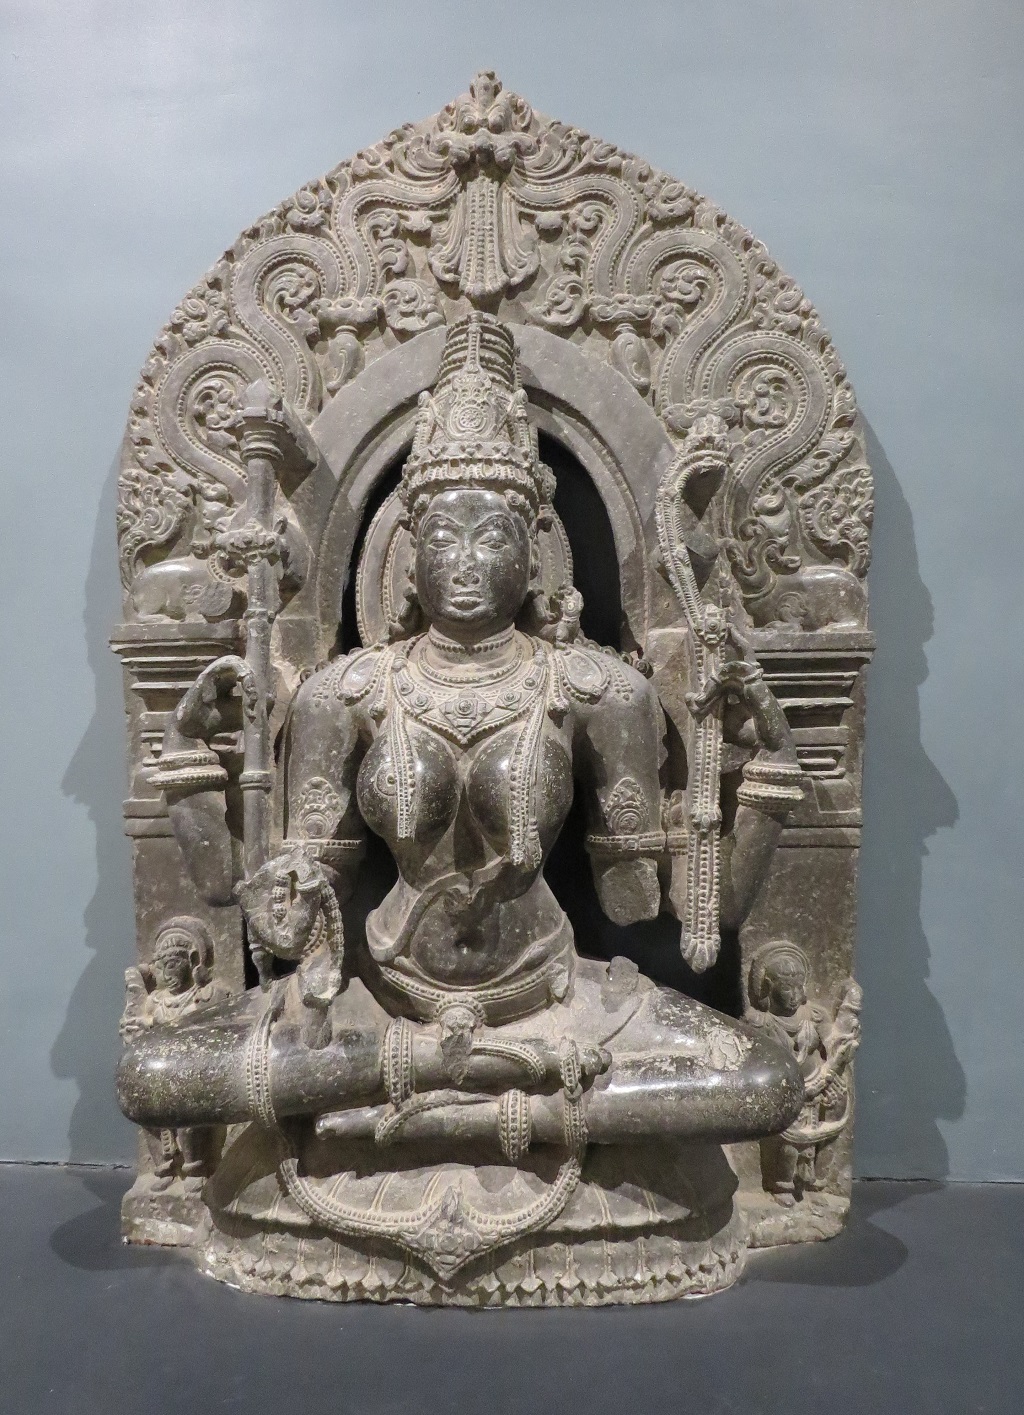 Sarasvati, The Goddess of Learning